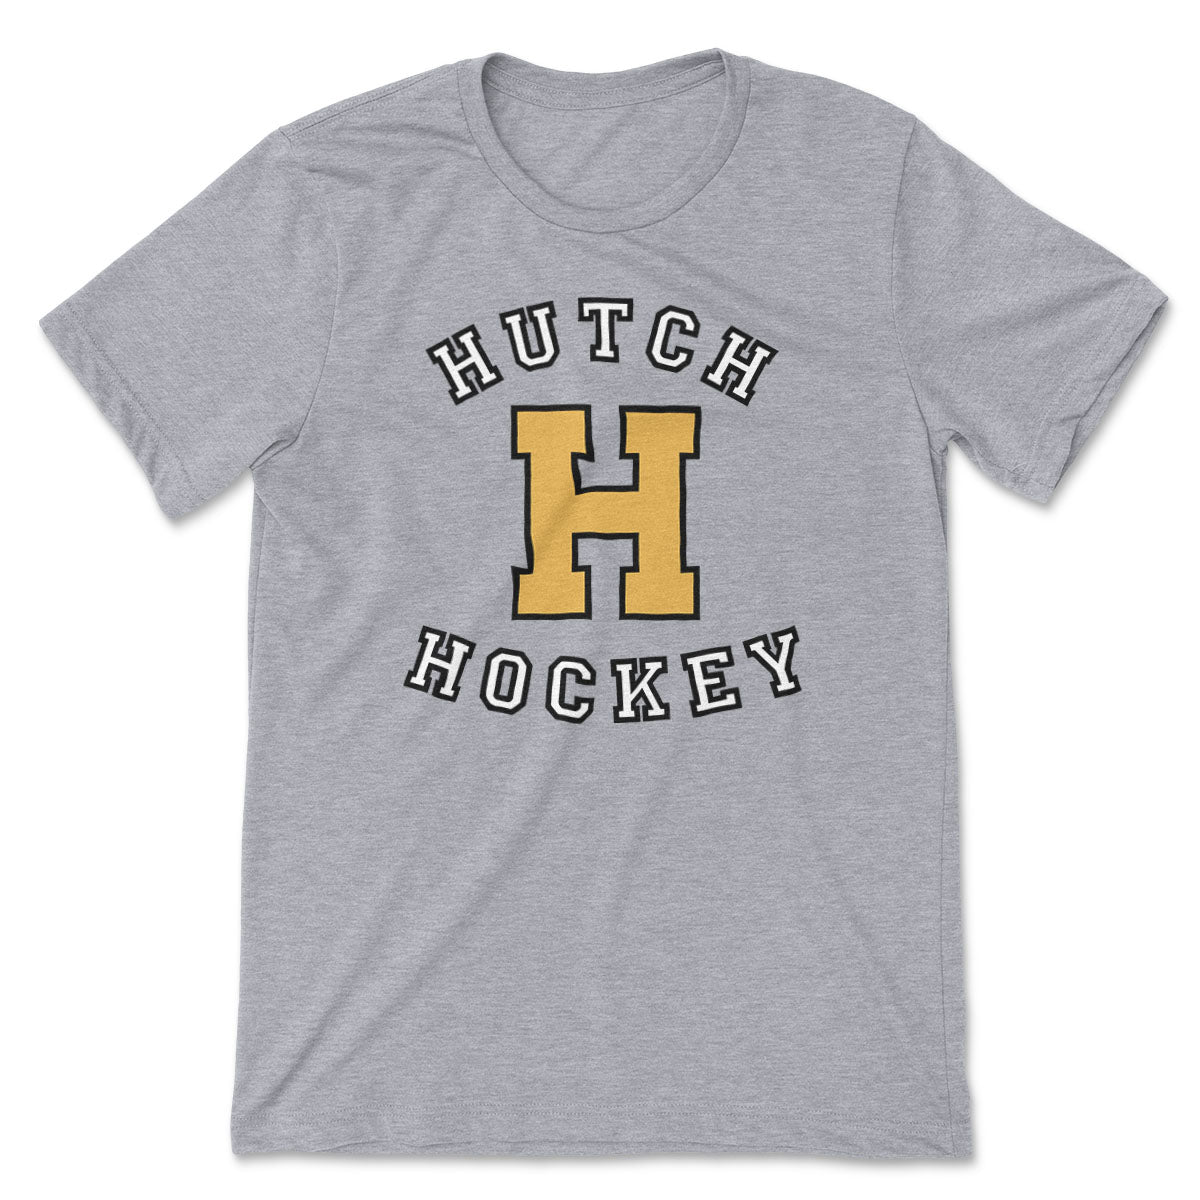 Hutchinson Girls Hockey // Youth Tee